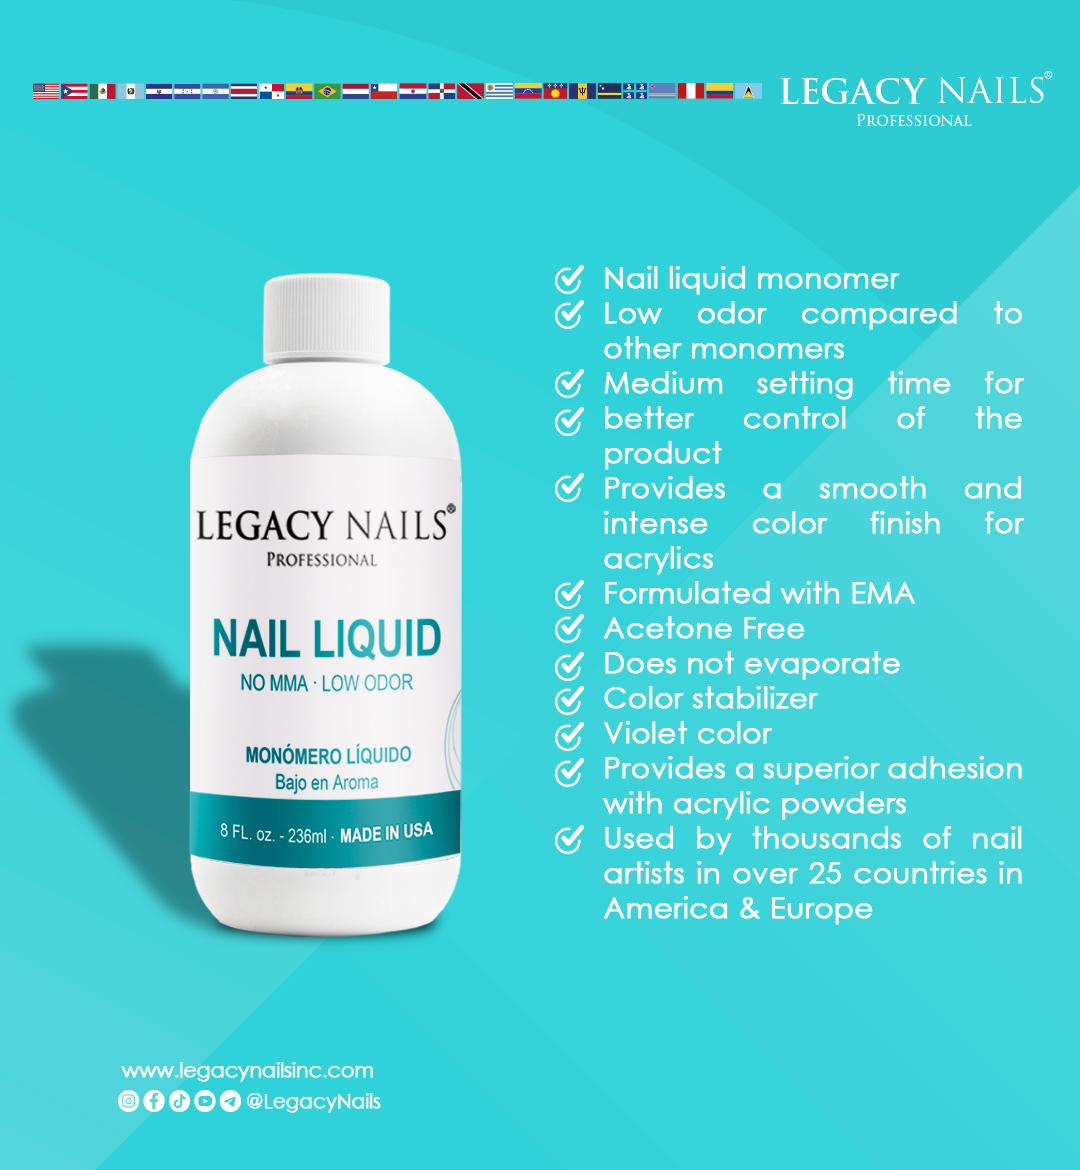 Saviland 5 oz Monomer Acrylic Nail Liquid - Professional Acrylic Nail Liquid  Polymer Professional Use At Home Acrylic Nail System for Acrylic Powder  Long-lasting Flexible Acrylic Monomer Liquid